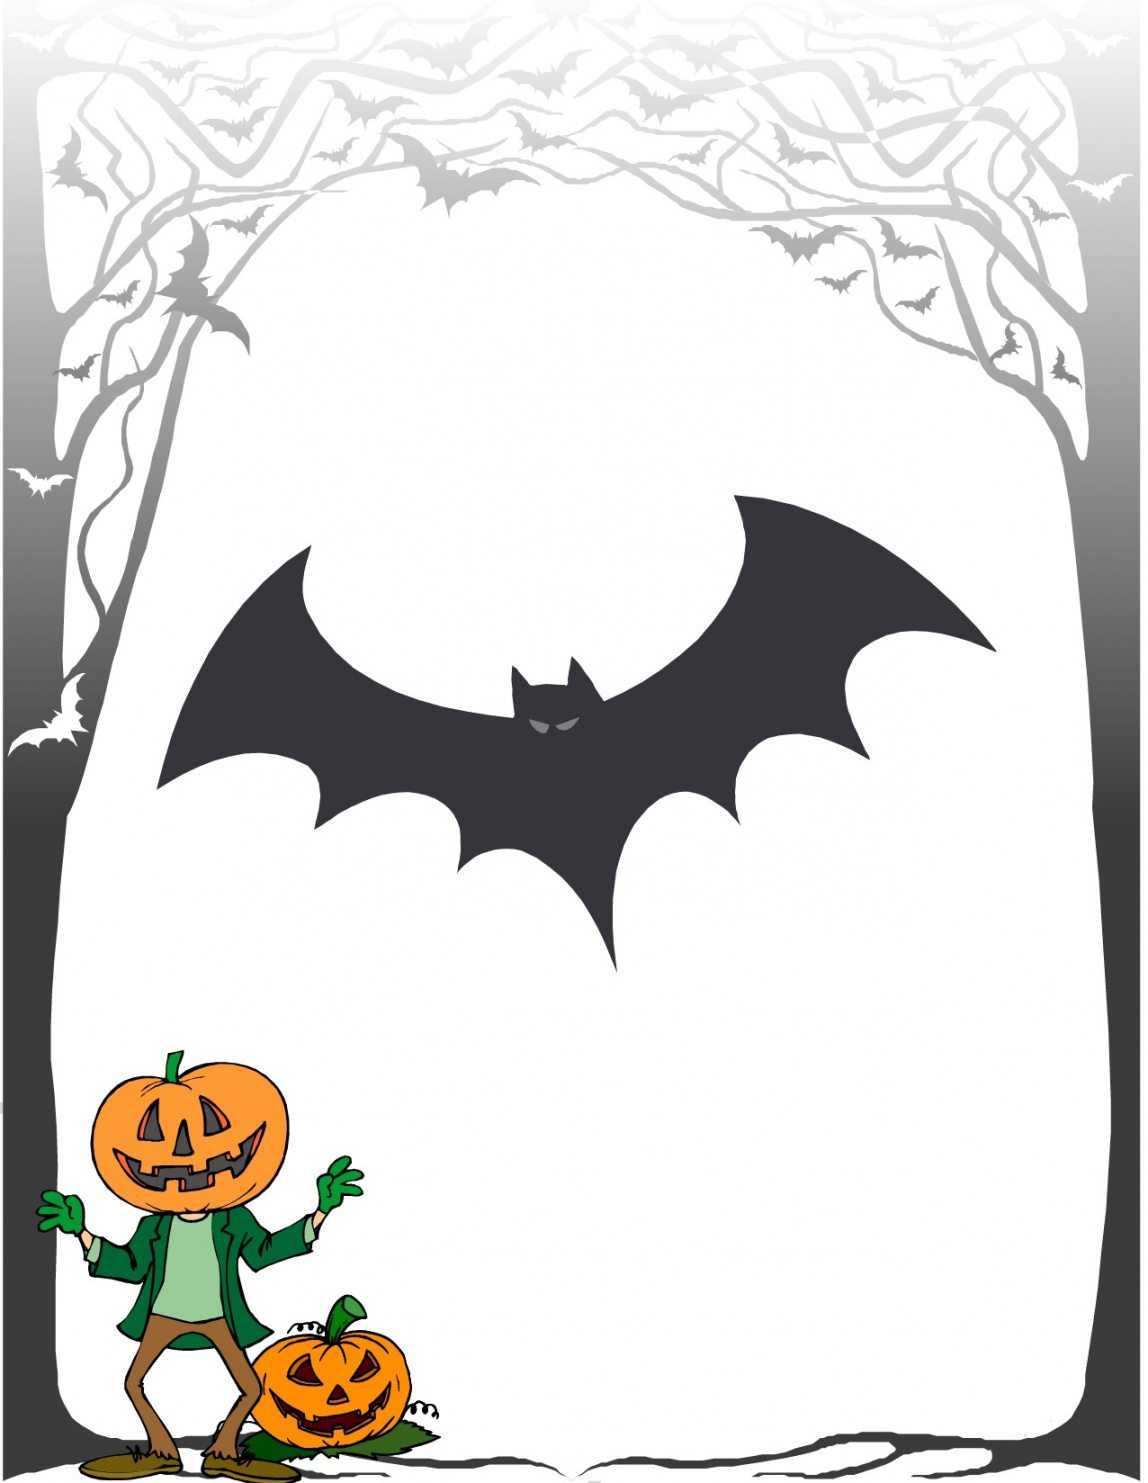 Editable Halloween Award Certificate Maker Costume Contest Inside Halloween Certificate Template